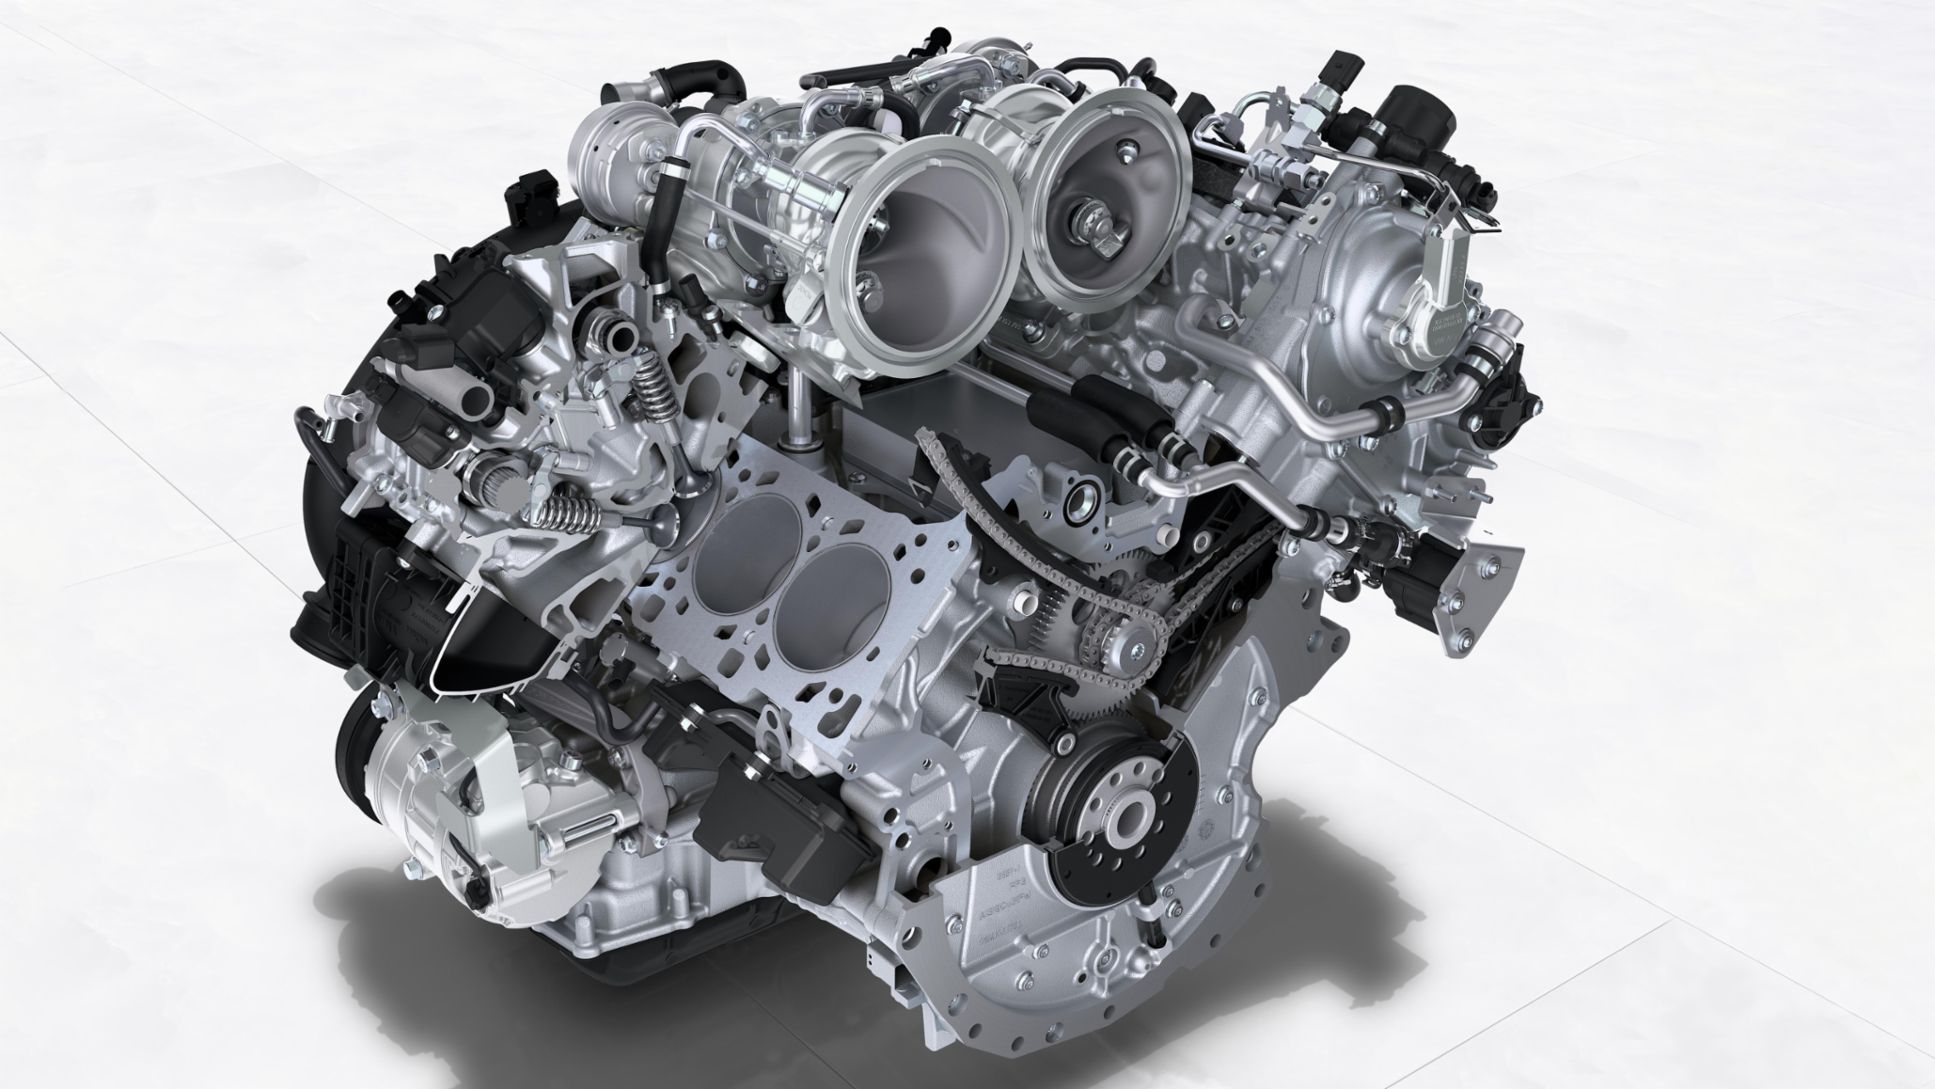 Macan Turbo - 2.9-litre turbocharged V6 engine, 2019, Porsche AG